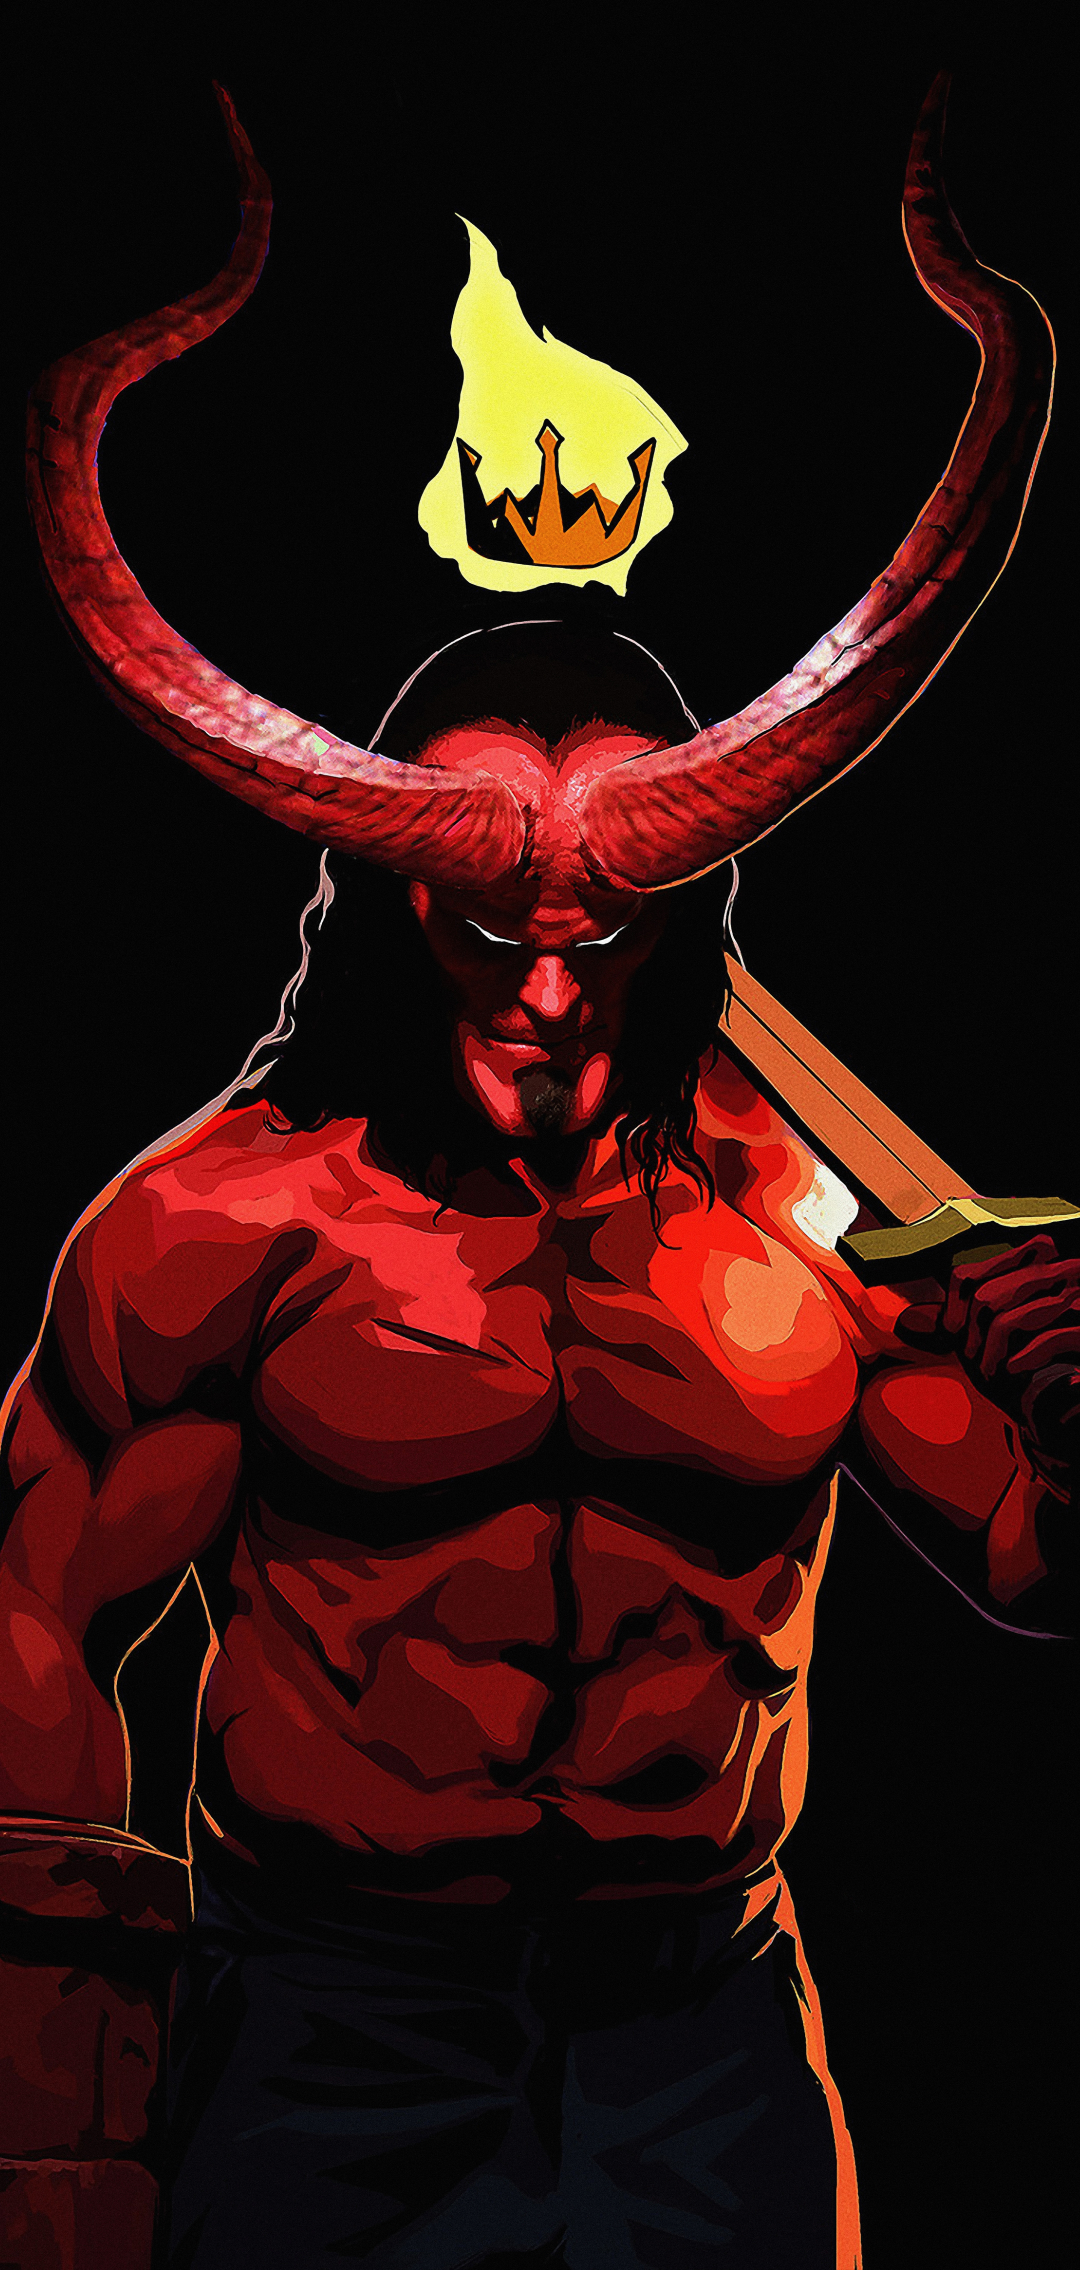 1080x2270 Poster Of Hellboy Movie Artwork 1080x2270 Resolution